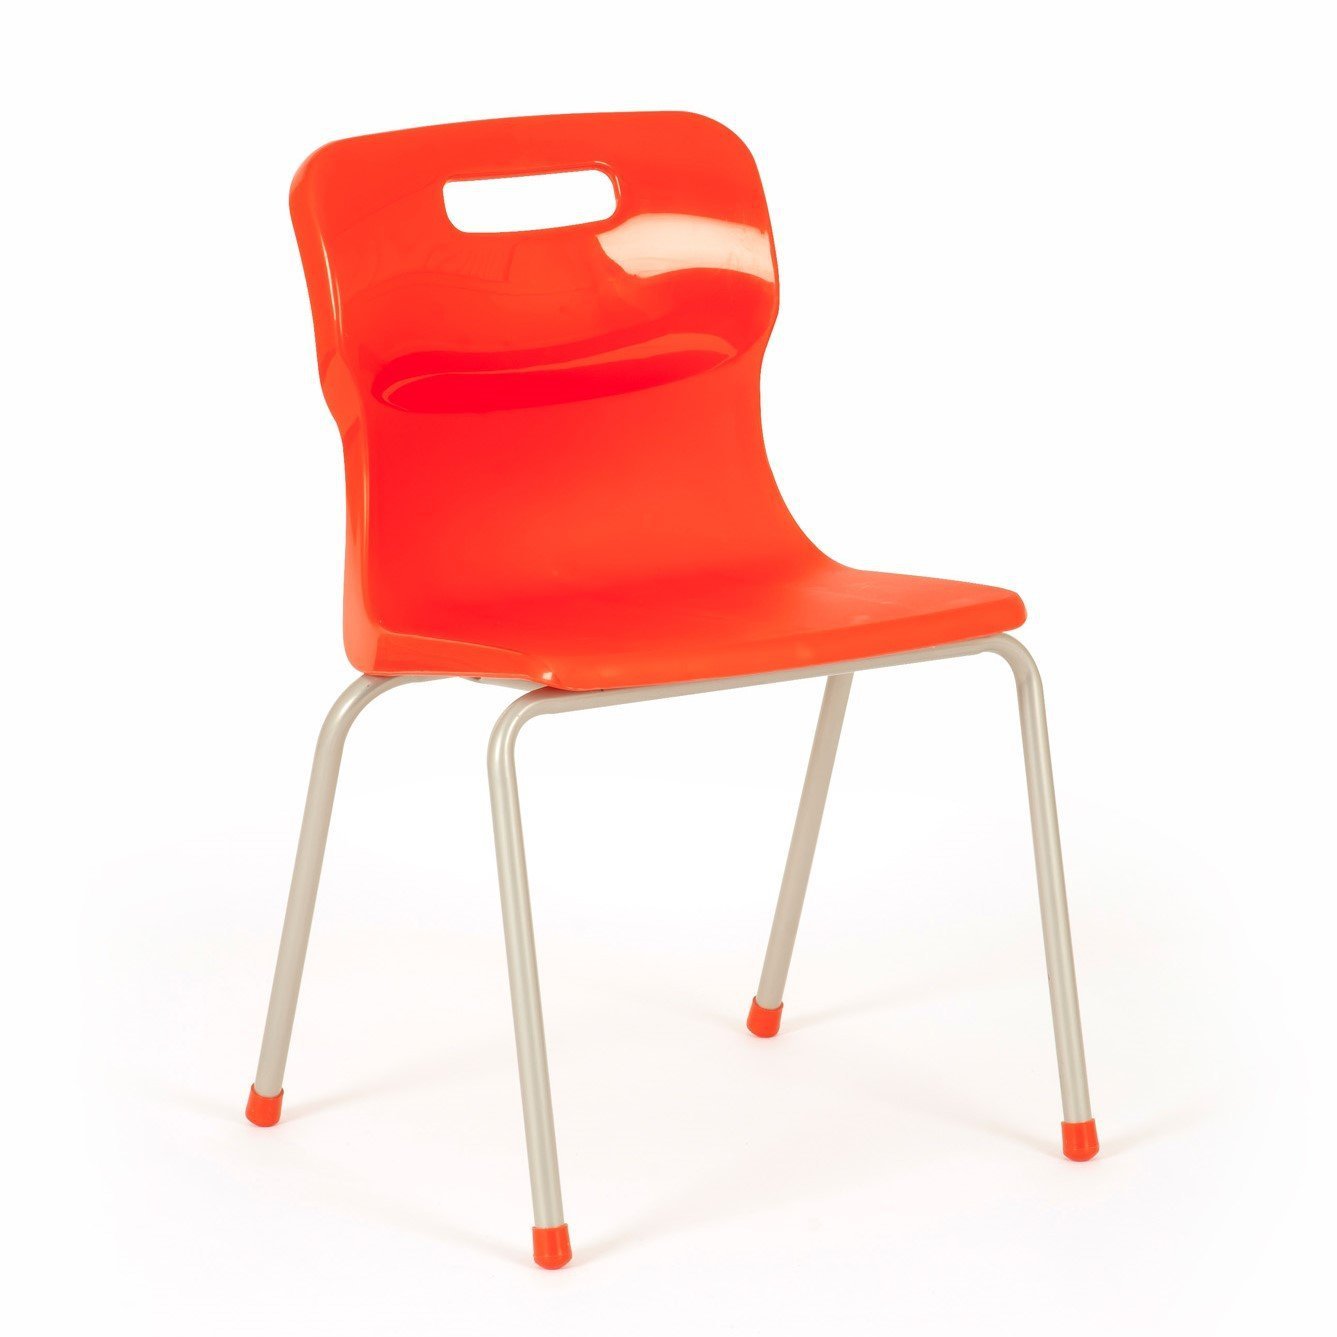 classroom chairs Size 3 - Seat Height 350 mm Titan 4-Leg Classroom Chair Size 3 - Seat Height 350 mm